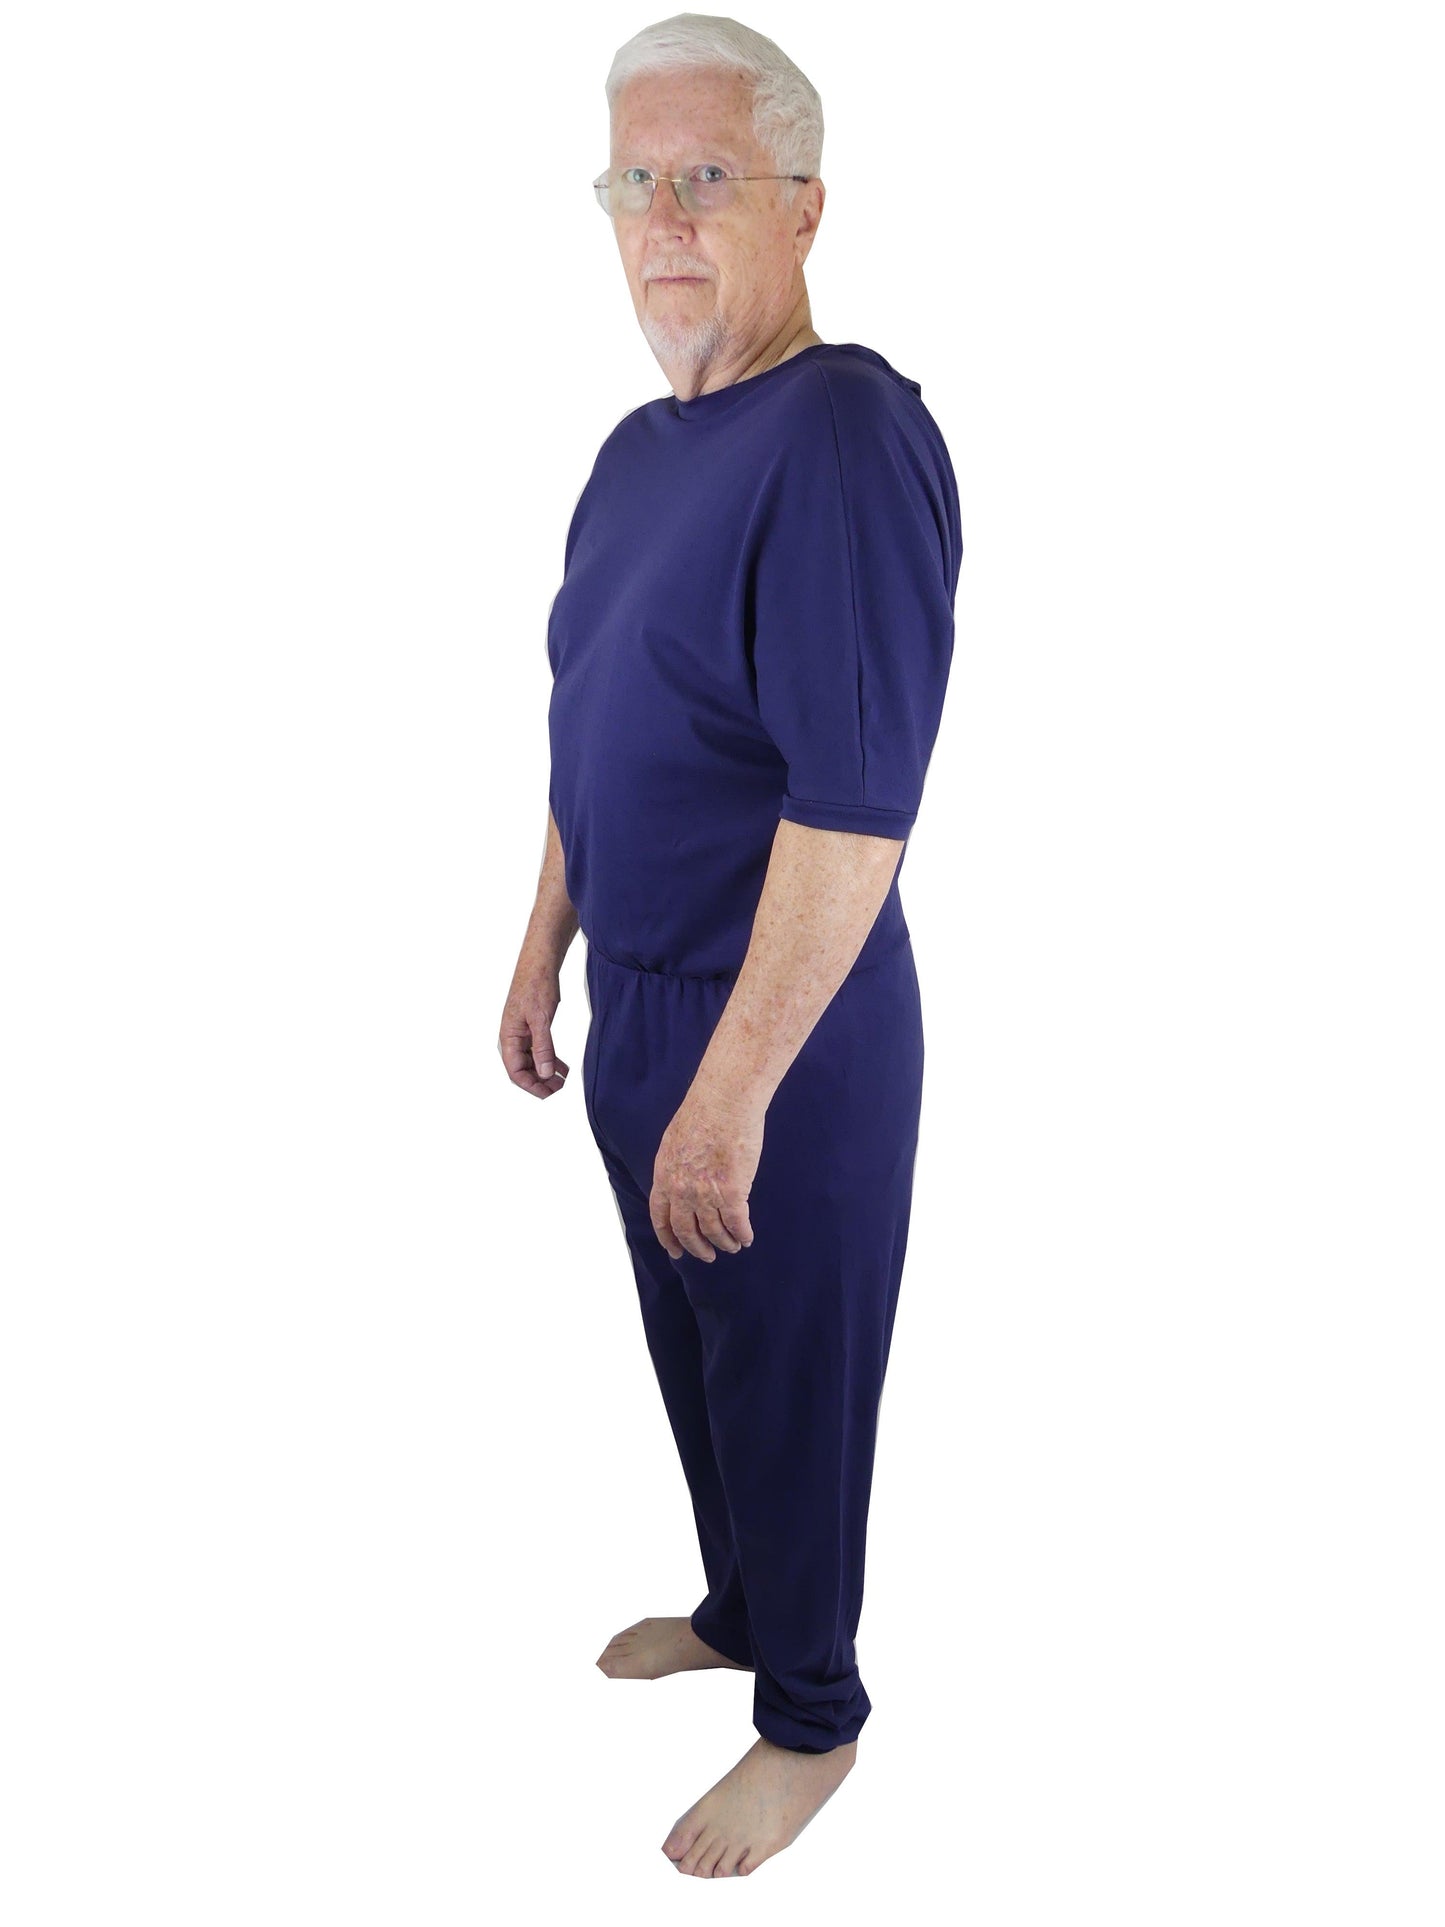 Men's Adaptive Nightwear: All-in-One Pyjamas with Short Sleeves - M030 - MEDORIS